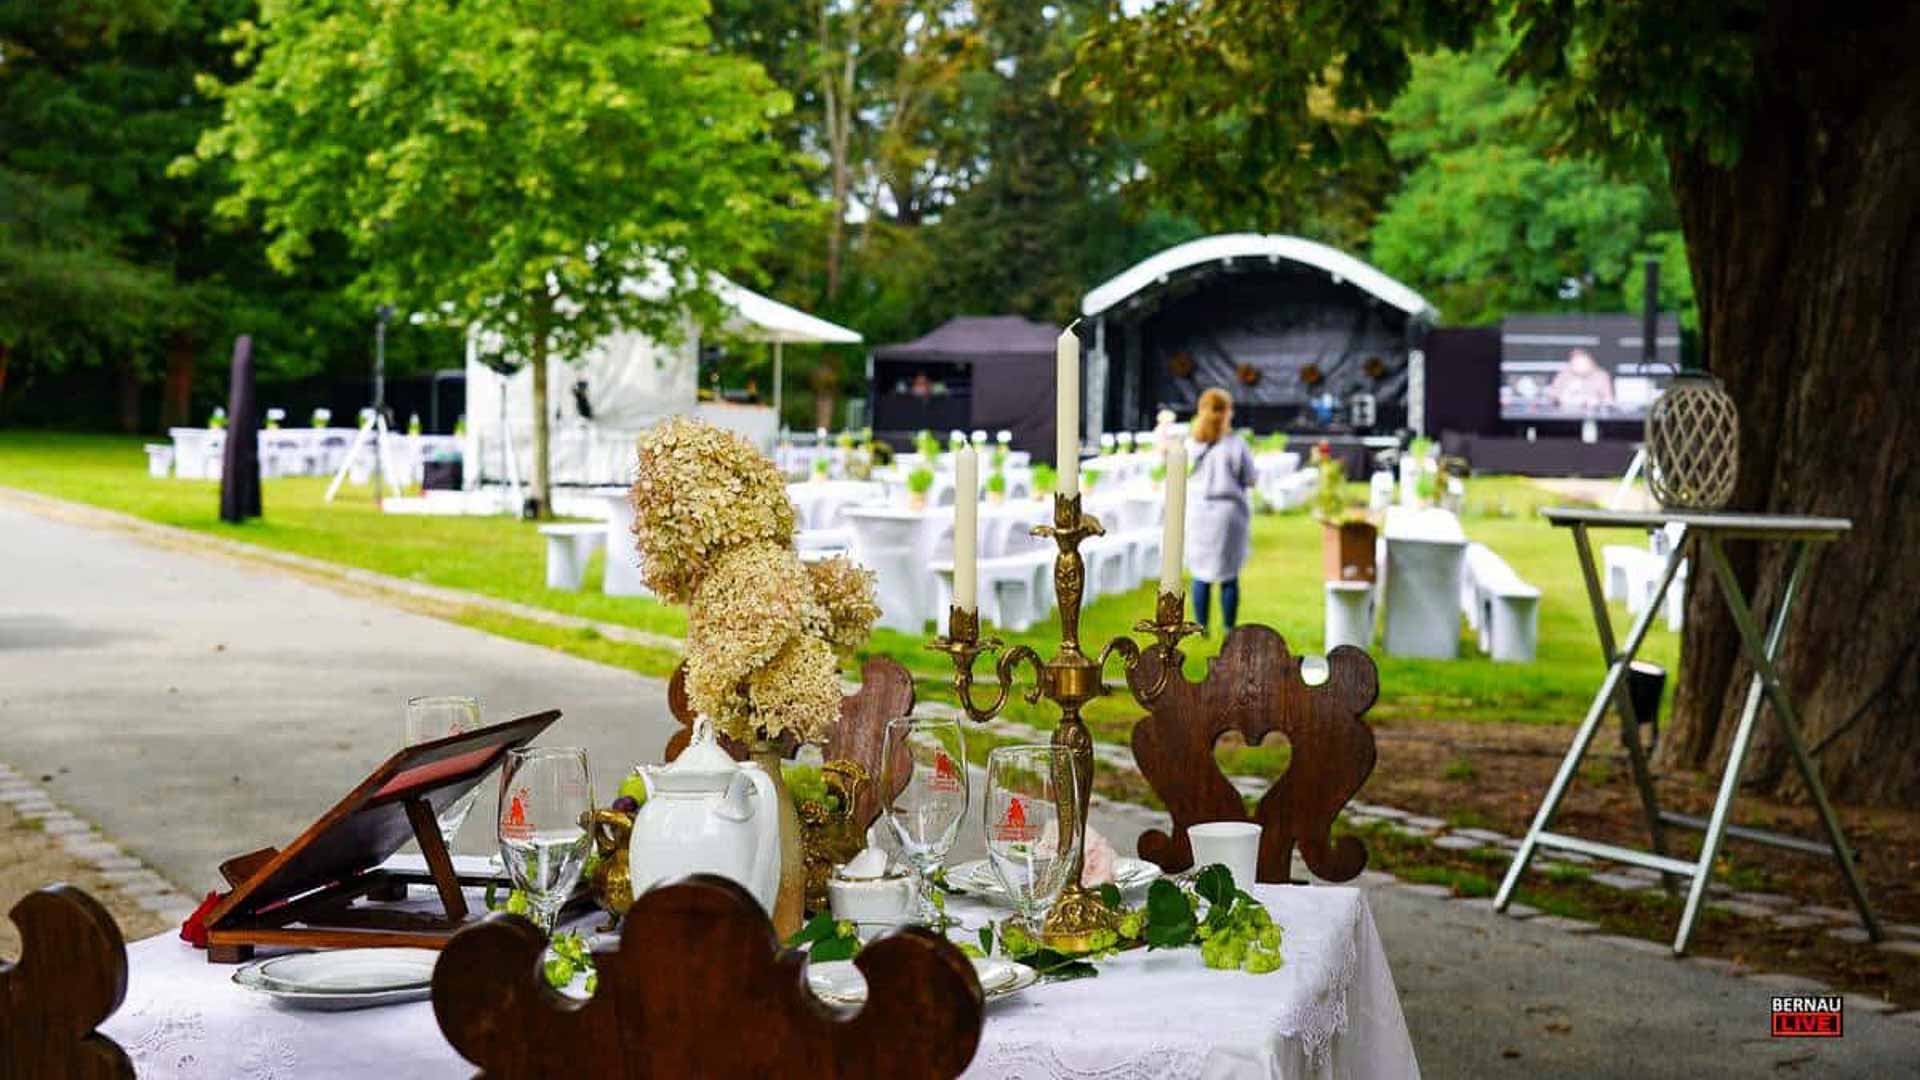 Dinner Picknick im Stadtpark Bernau - ab heute können Plätze reserviert werden